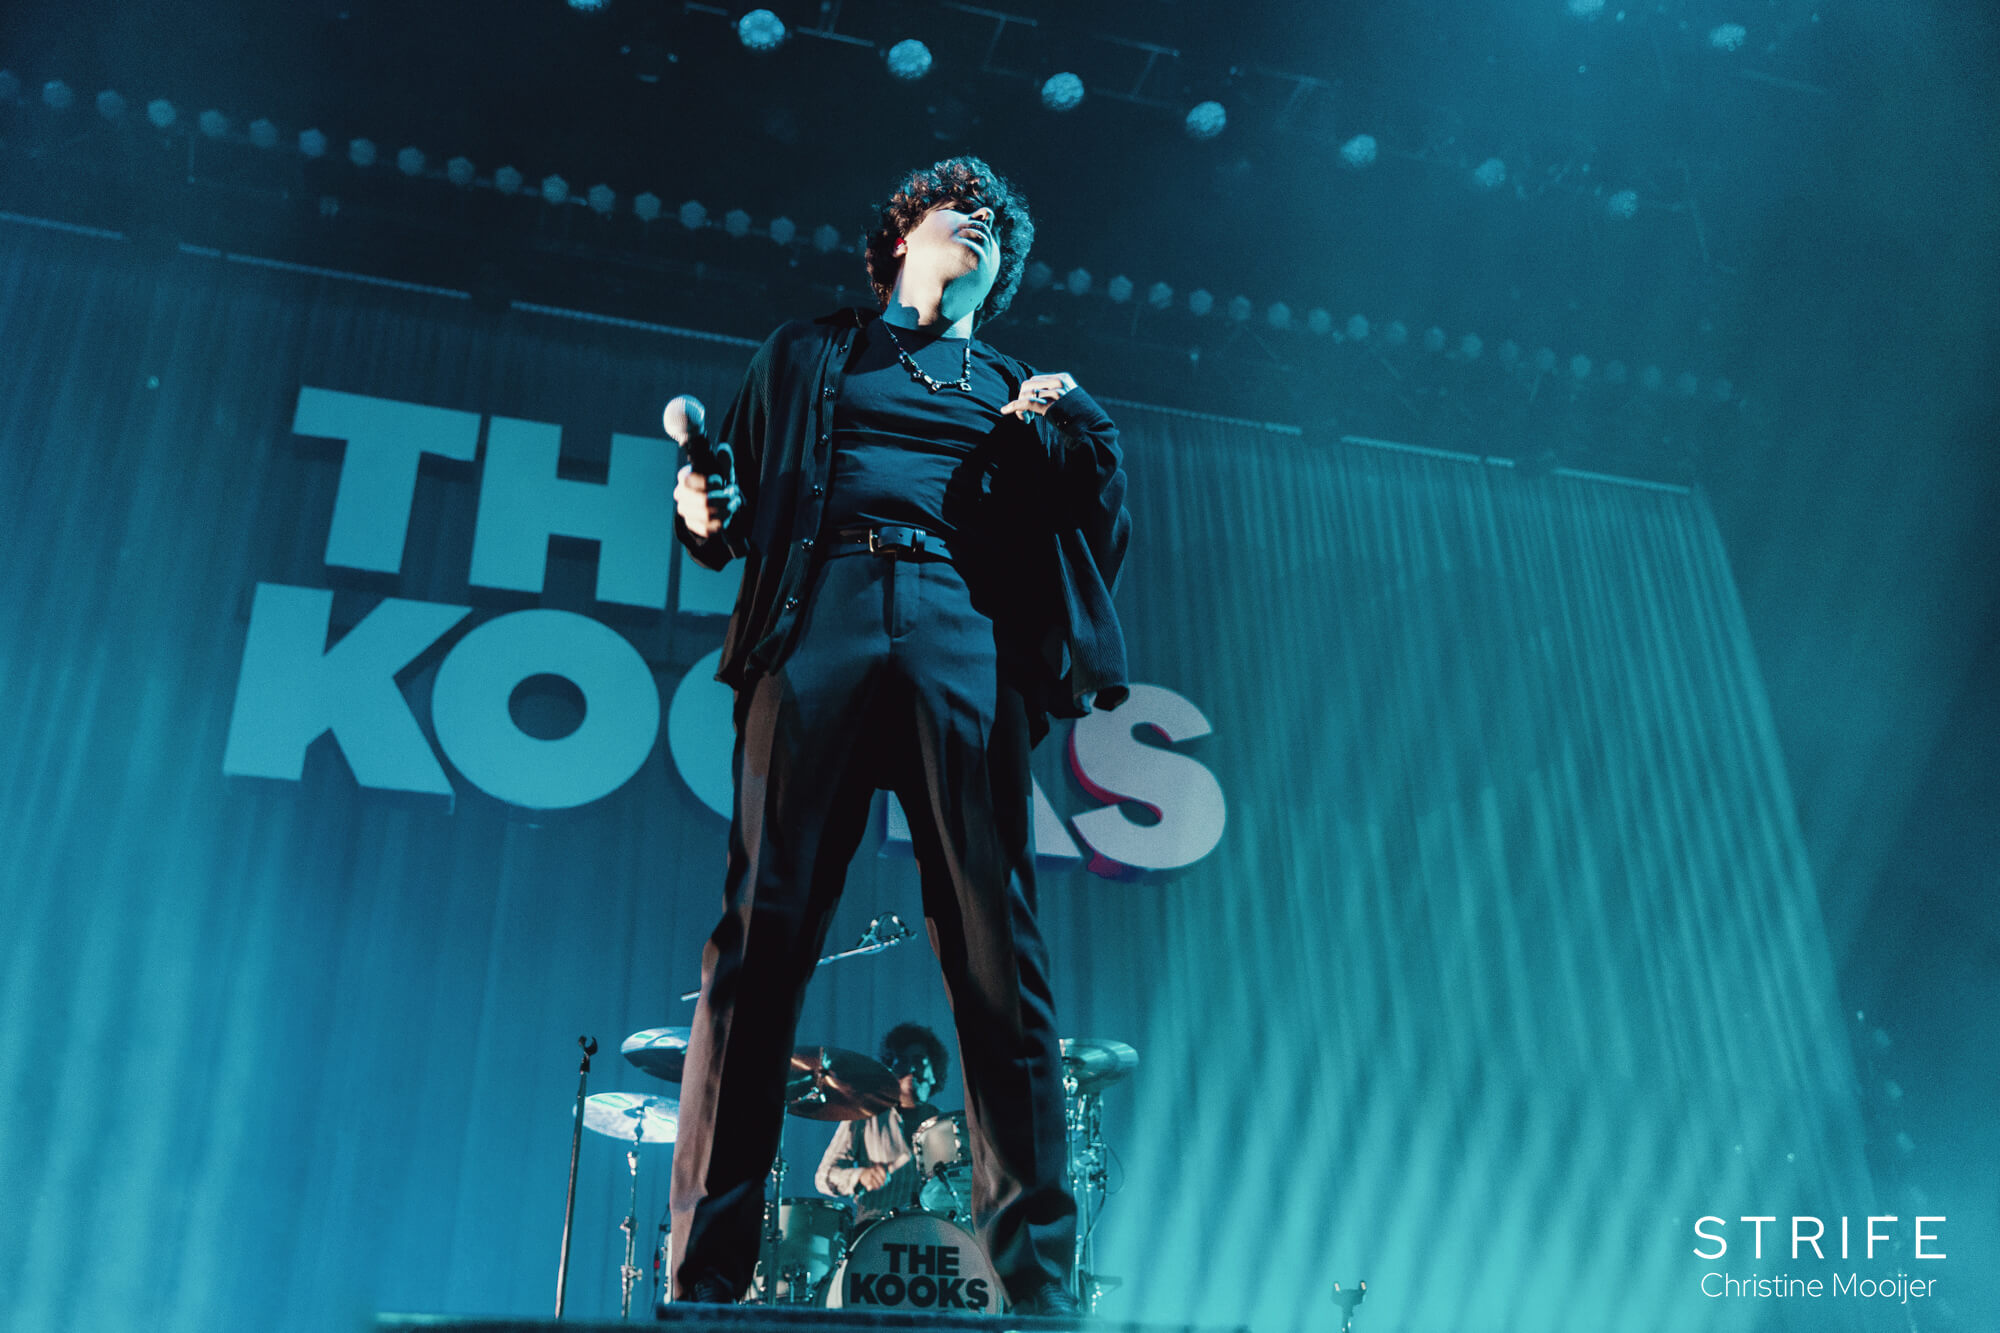 The Kooks @ AFAS Live, Amsterdam